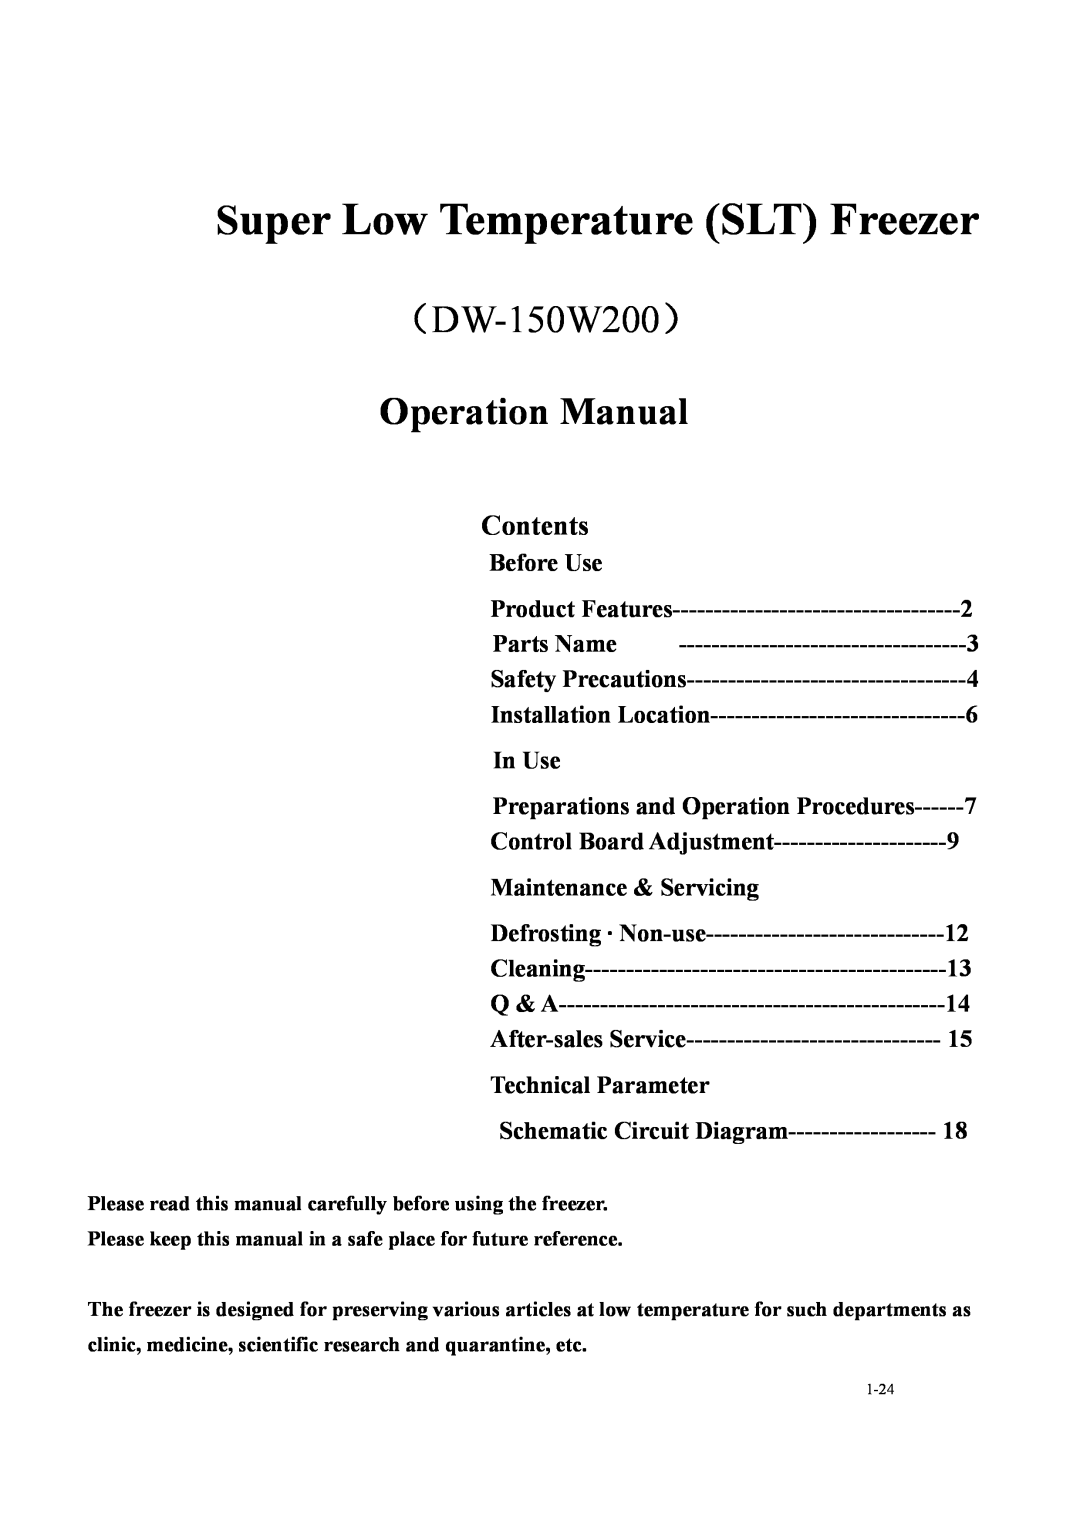 Haier operation manual Contents, Super Low Temperature SLT Freezer, （DW-150W200） 